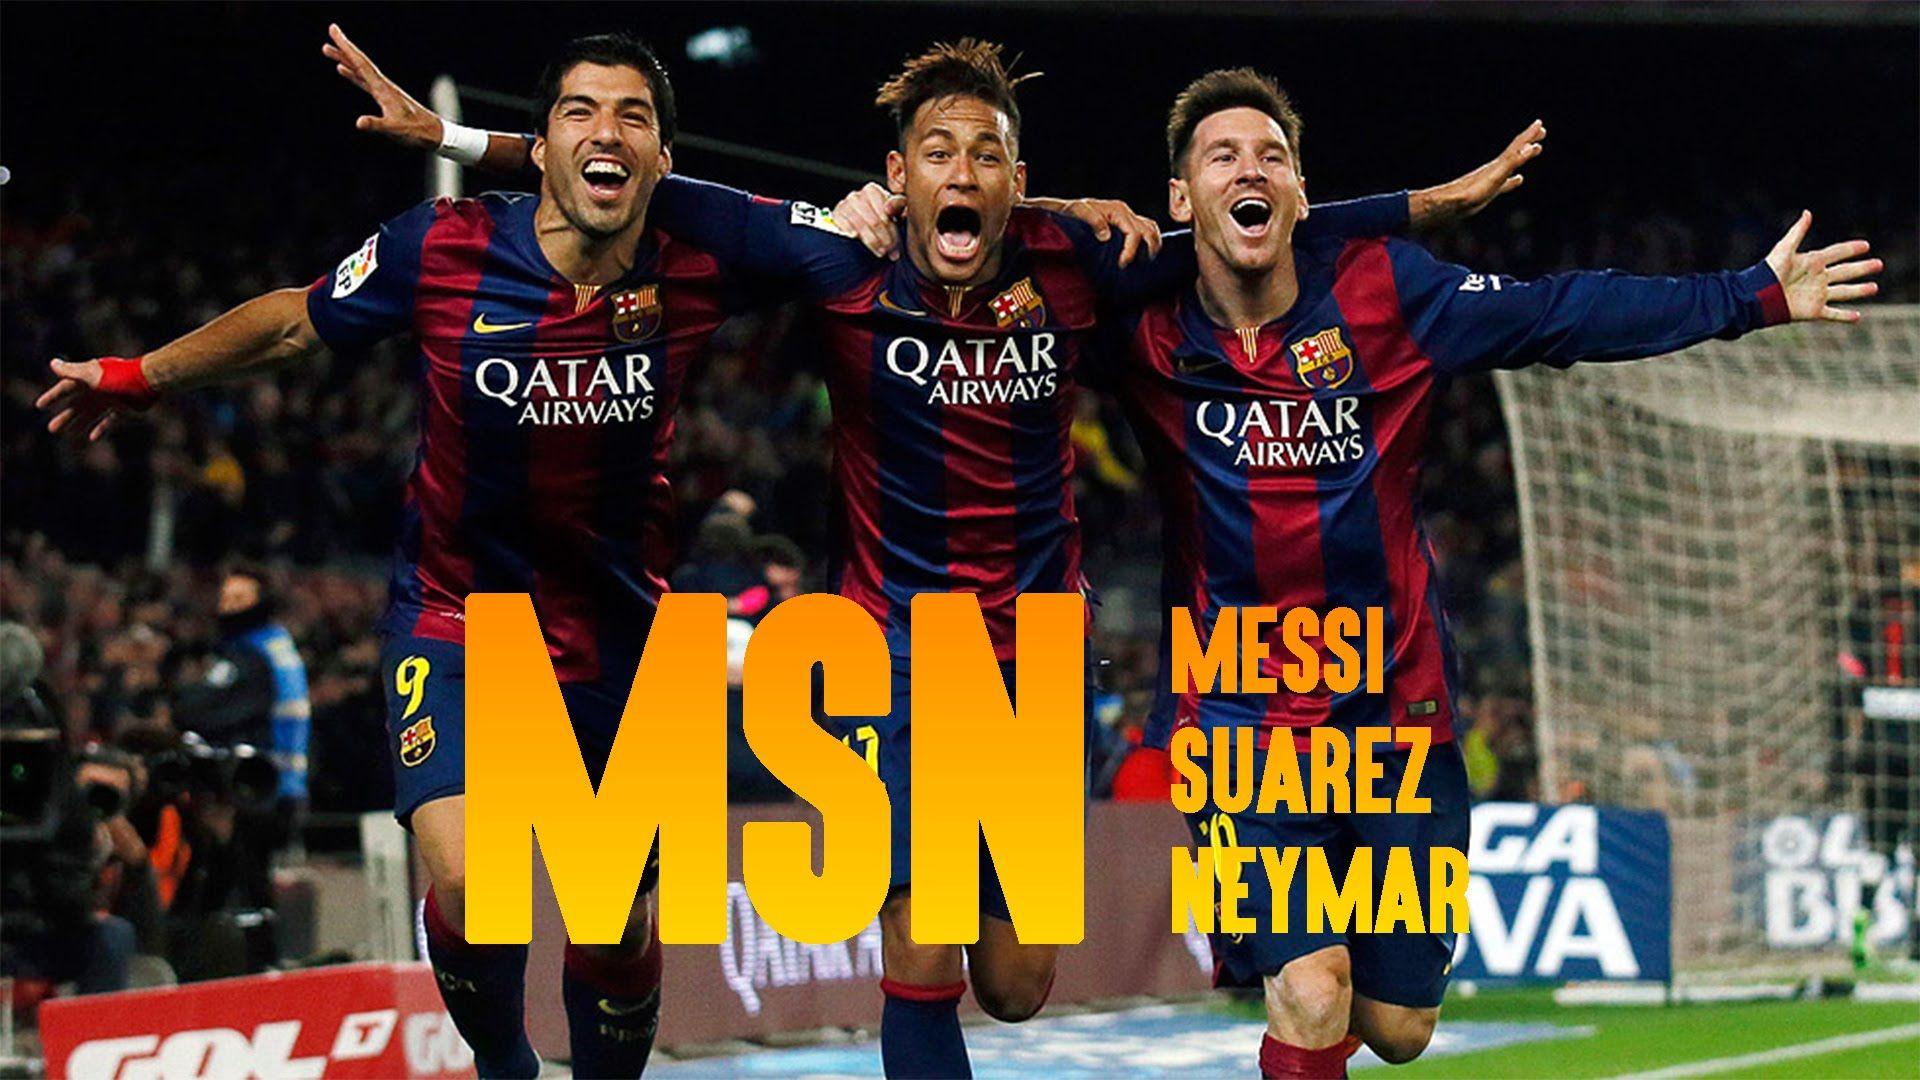 Messi Neymar Suarez Msn. Best Digital Slr Camera Reviews